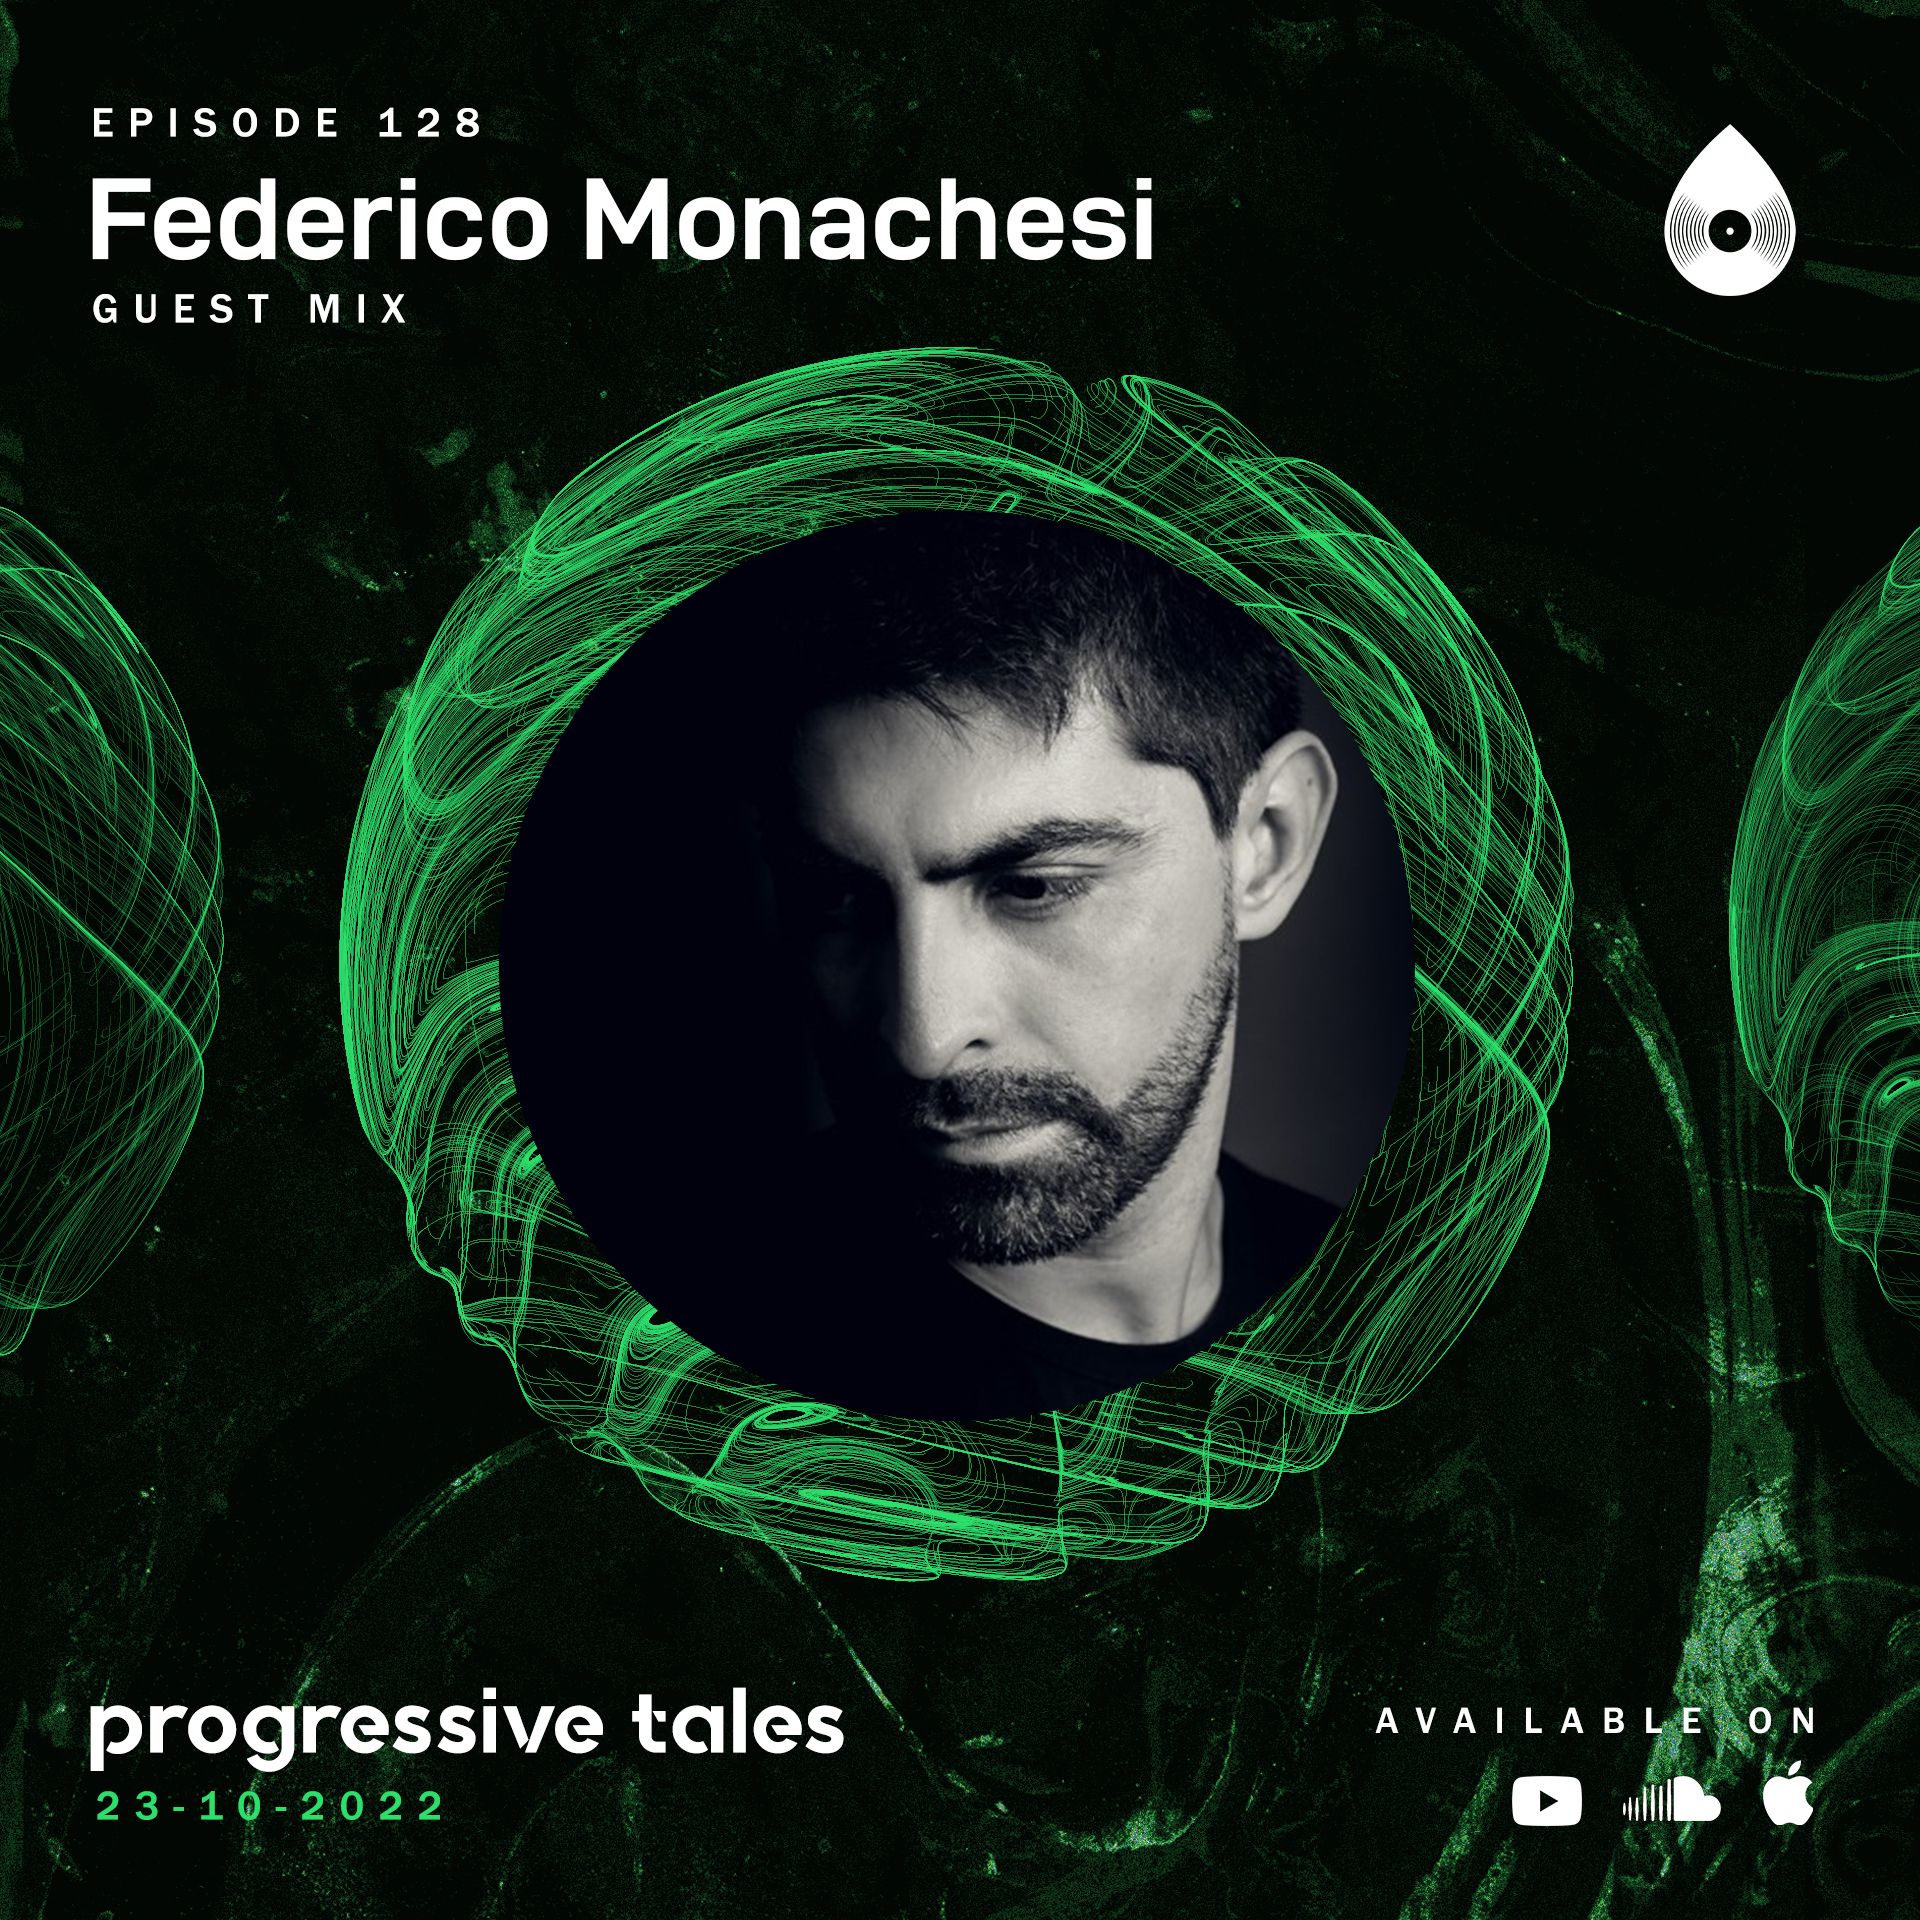 Sii mai 128 Guest Mix I Progressive Tales with Federico Monachesi